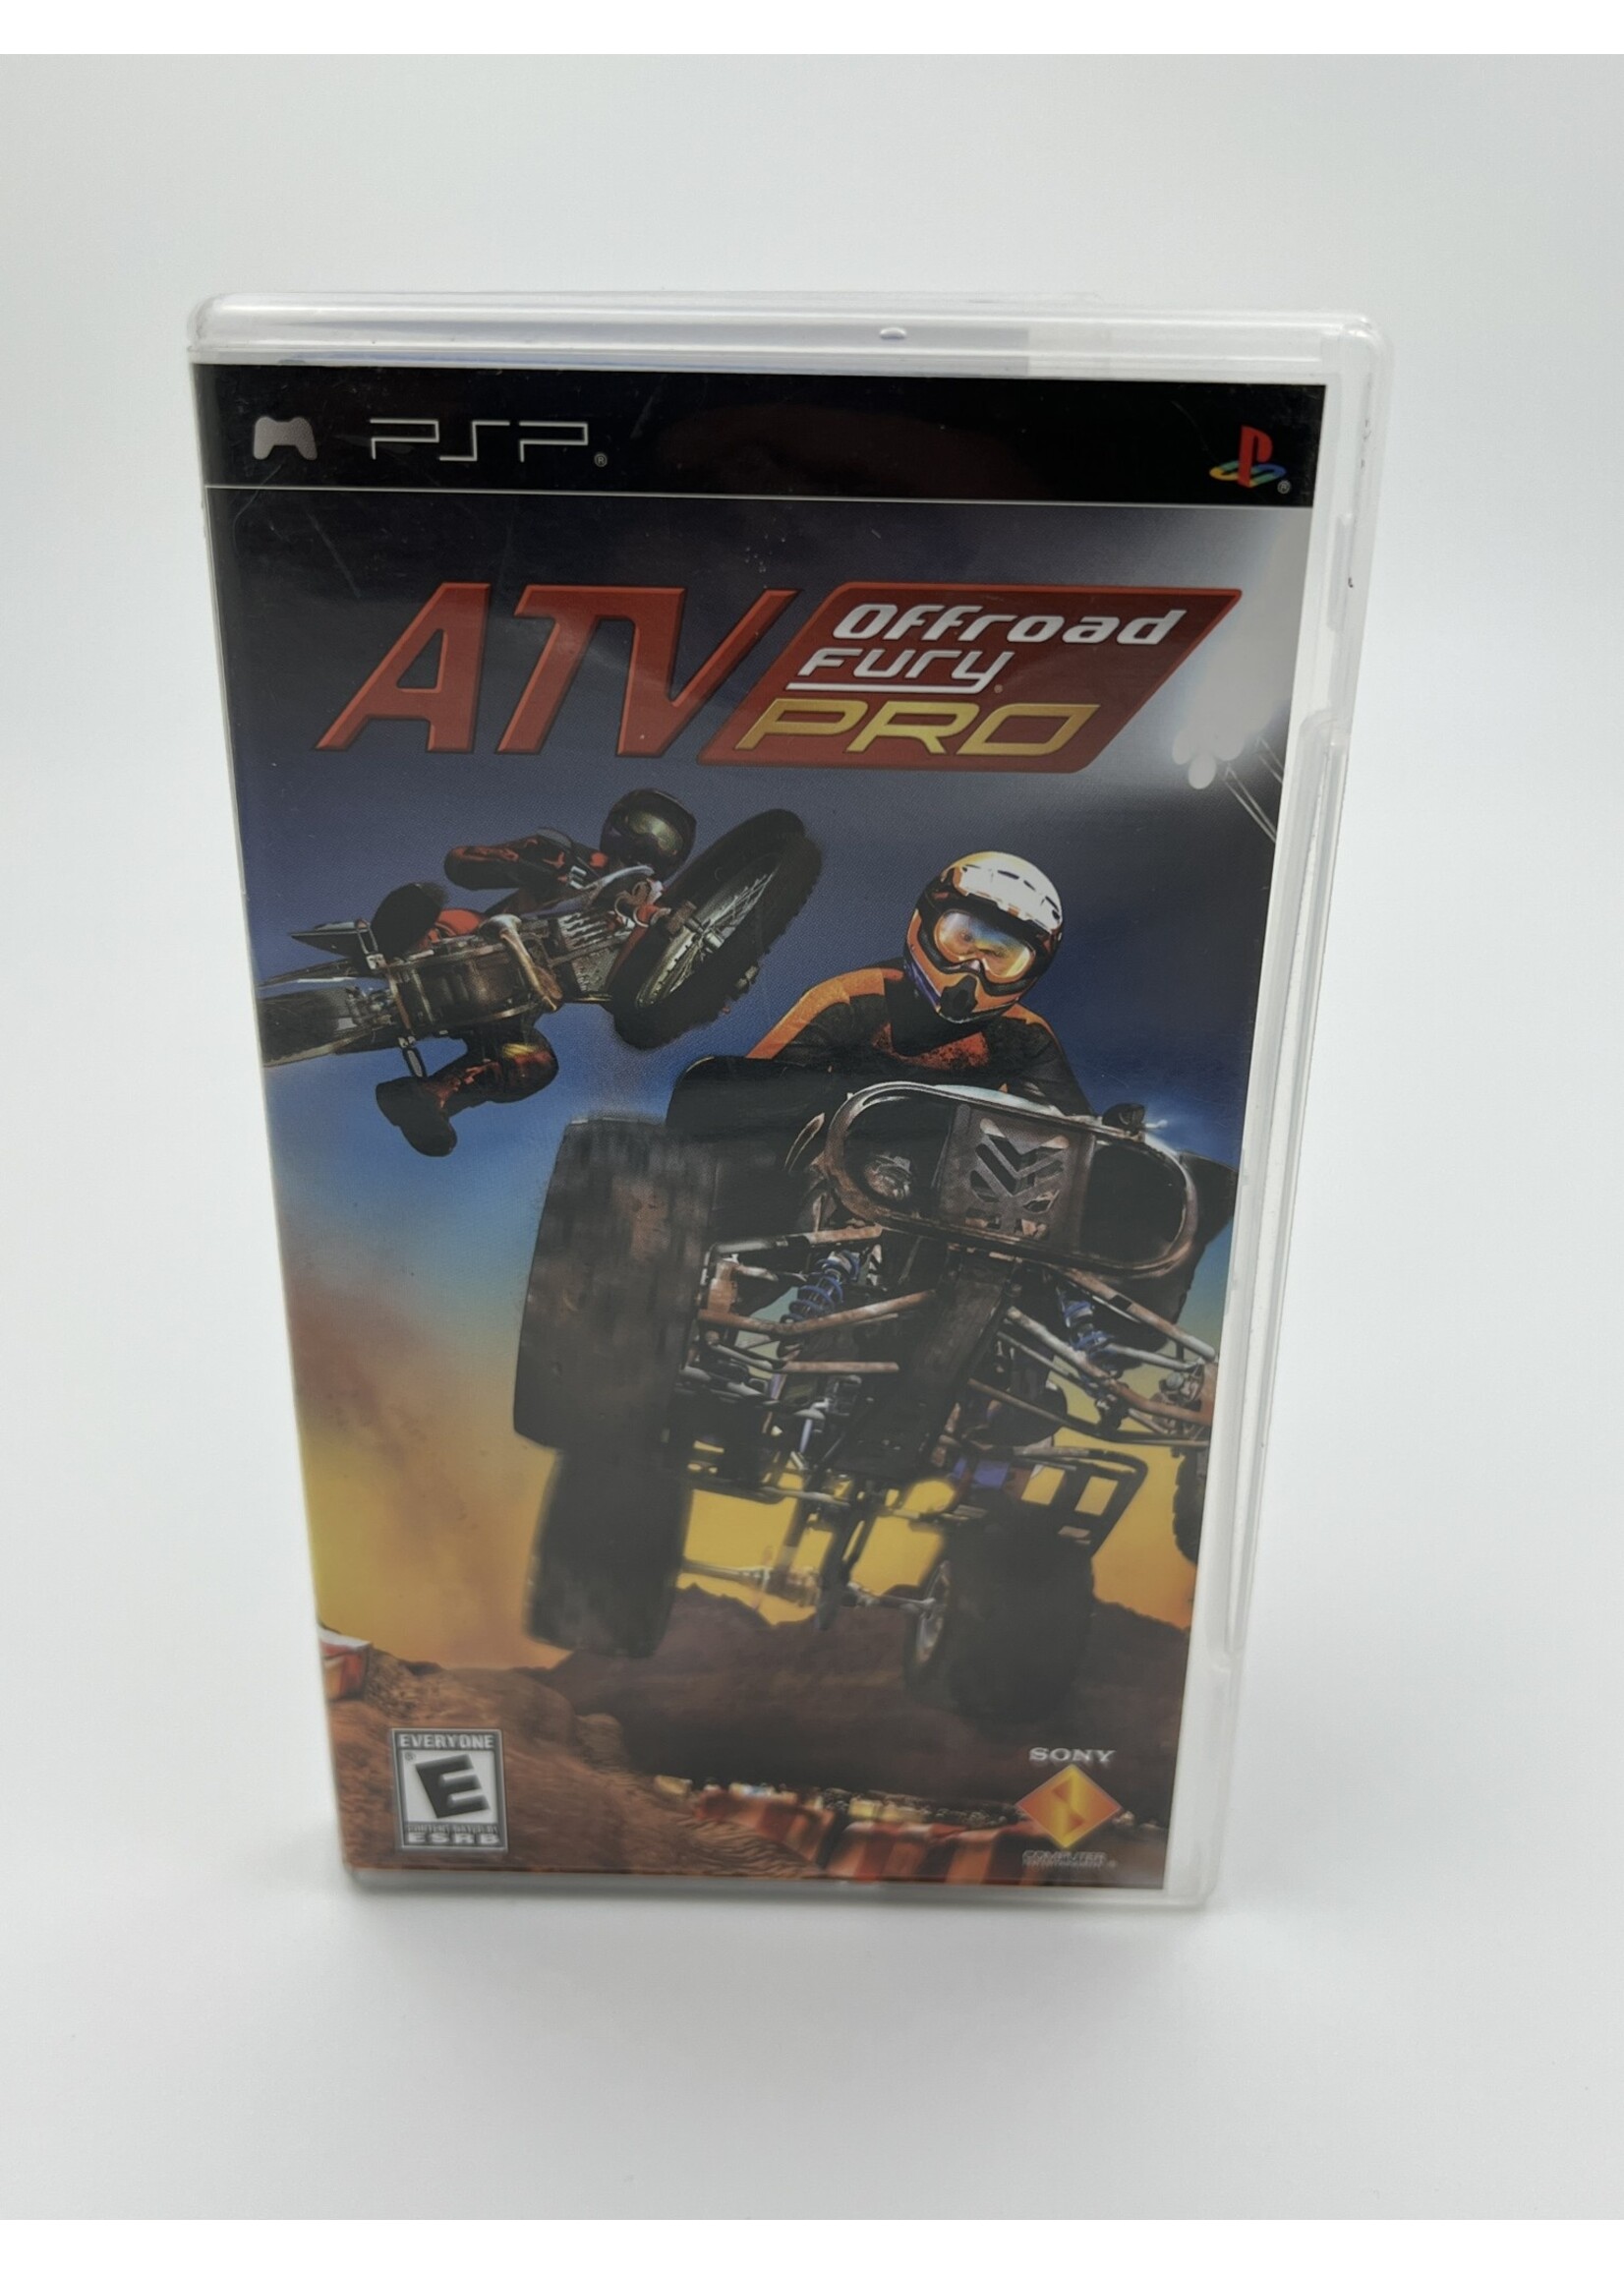 Sony ATV Offroad Fury Pro PSP